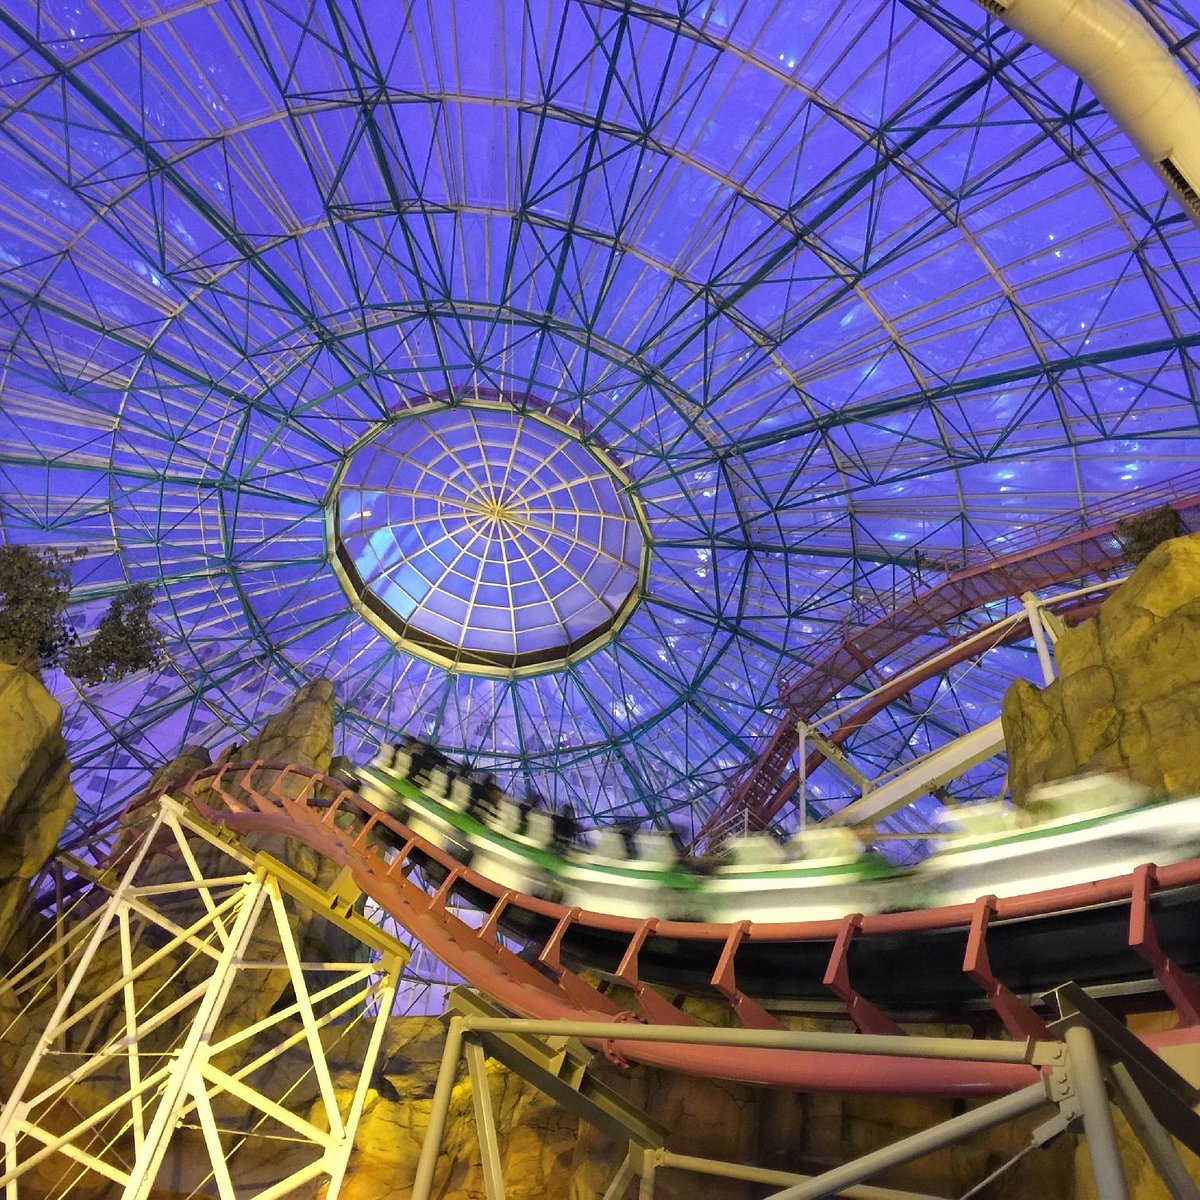 Adventuredome Theme Park